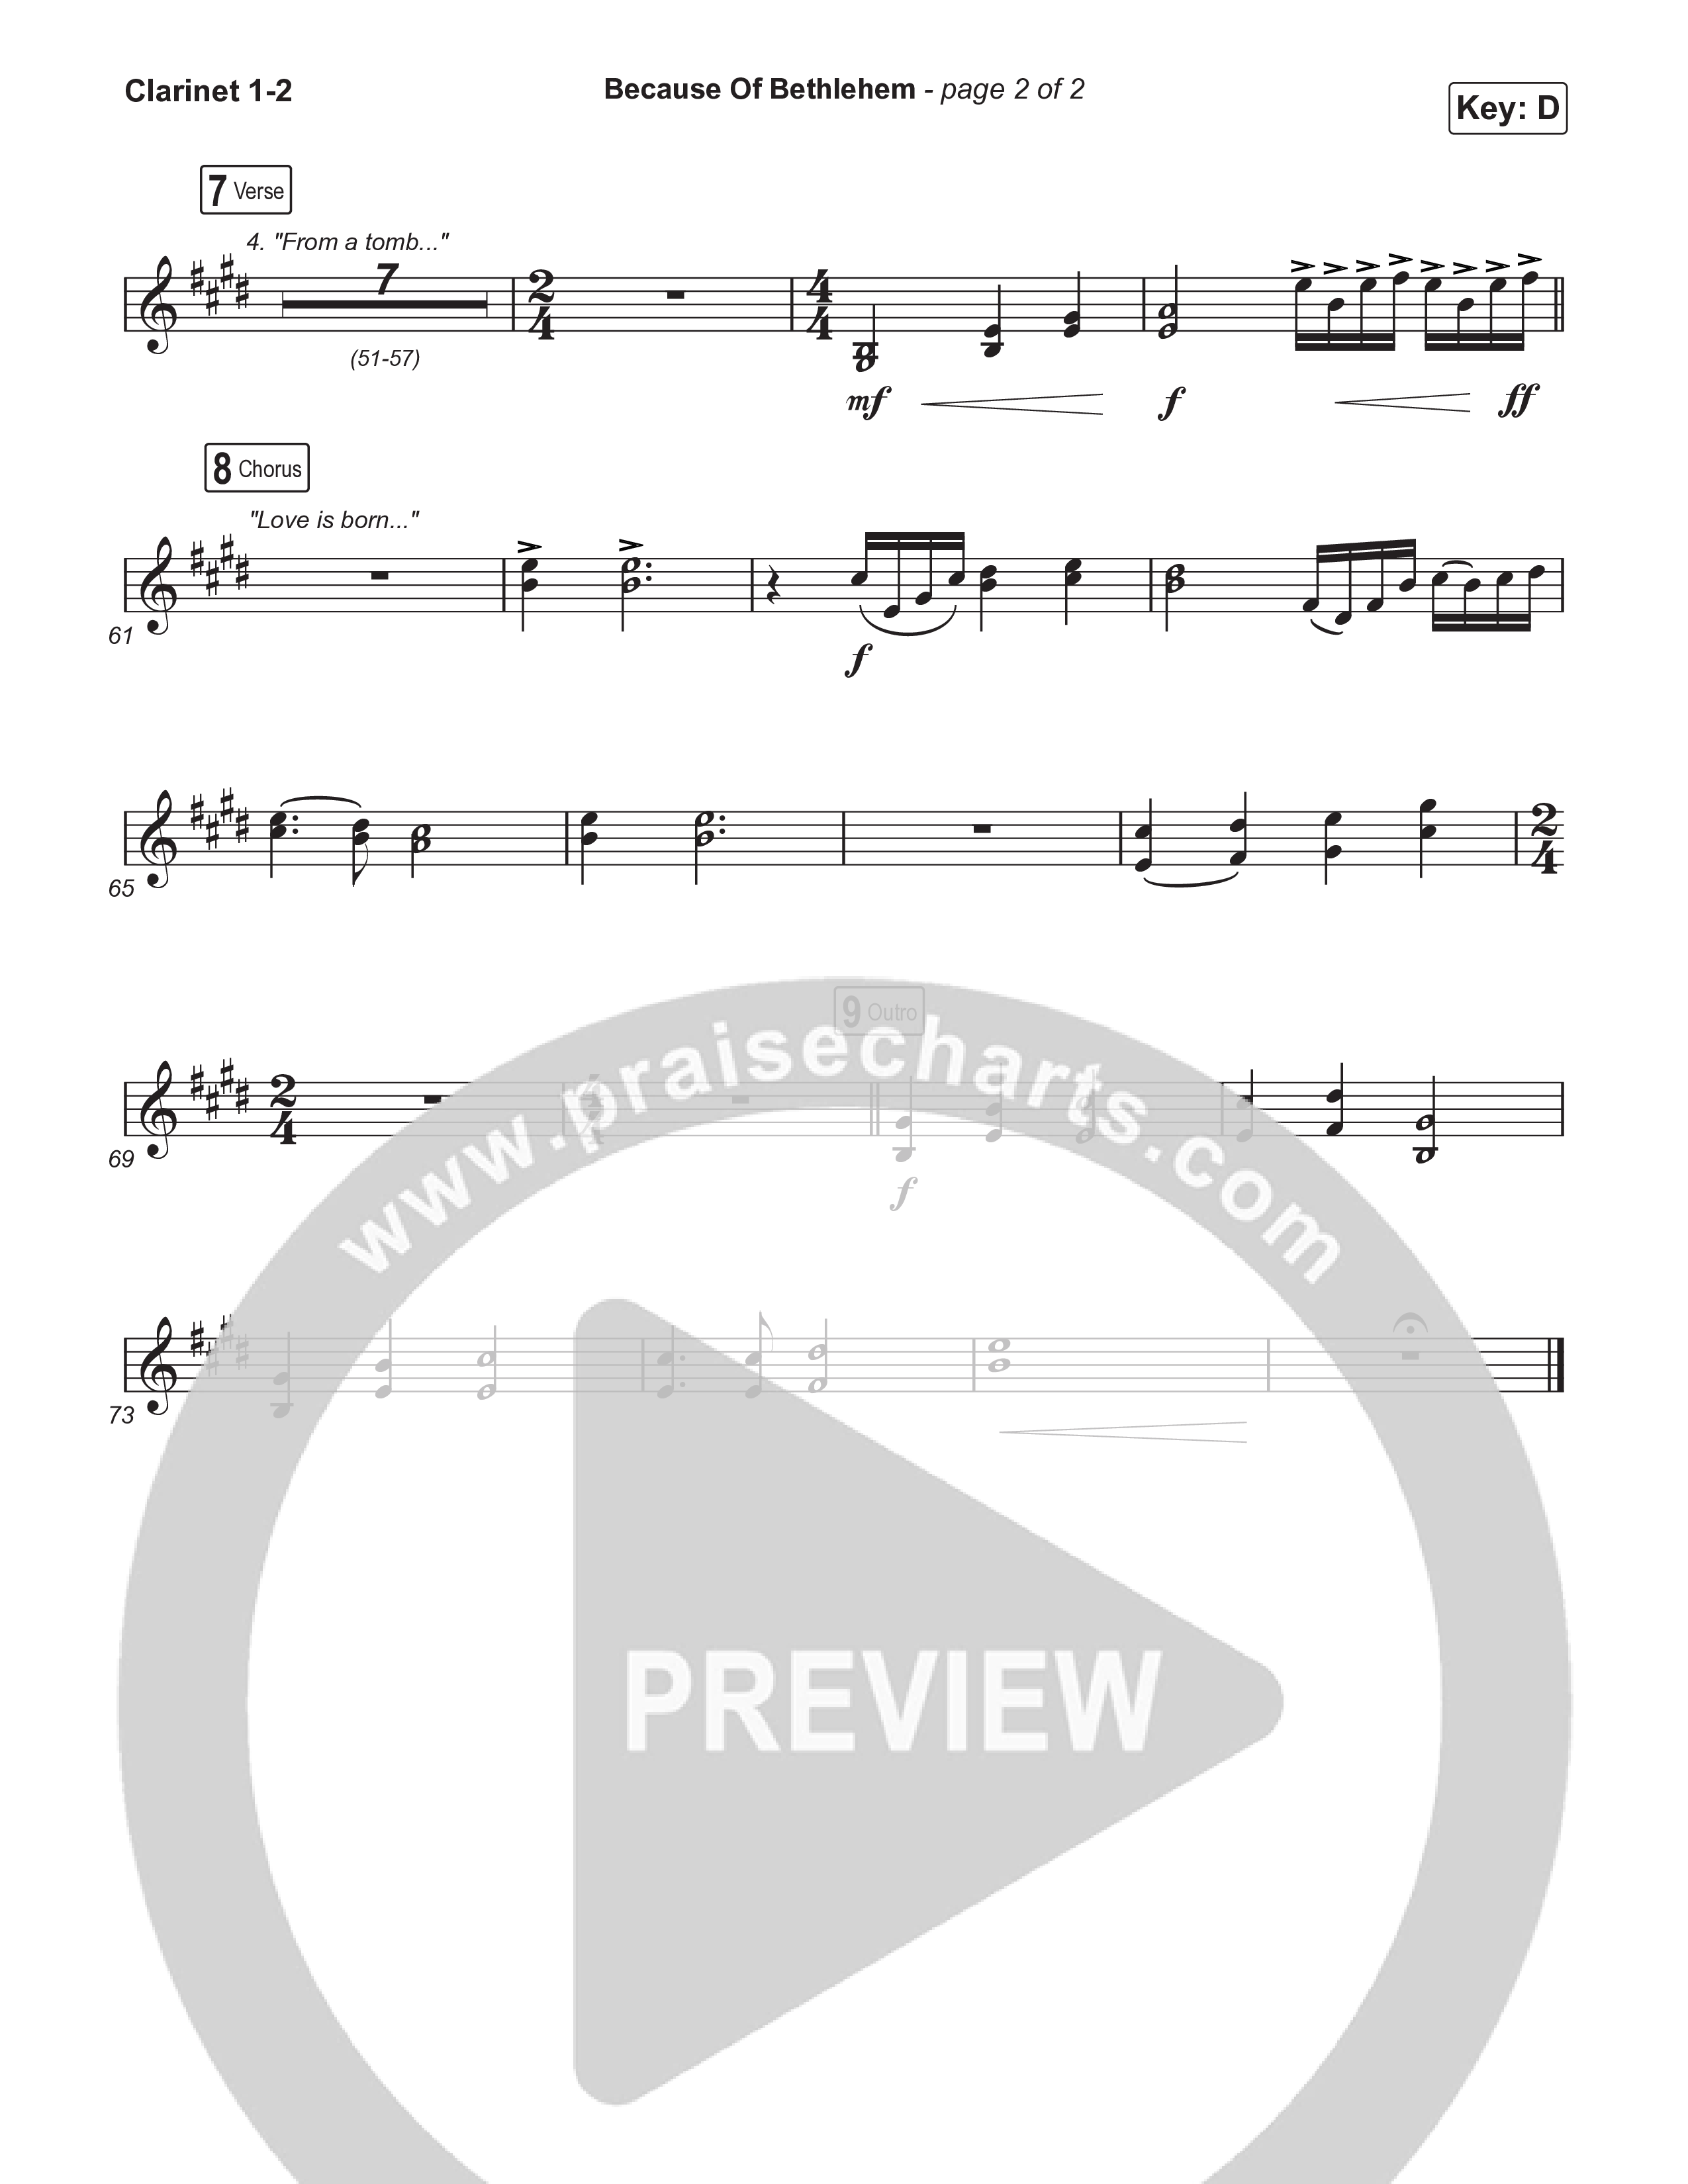 Because Of Bethlehem (Choral Anthem SATB) Clarinet 1/2 (Matthew West / Arr. Luke Gambill)